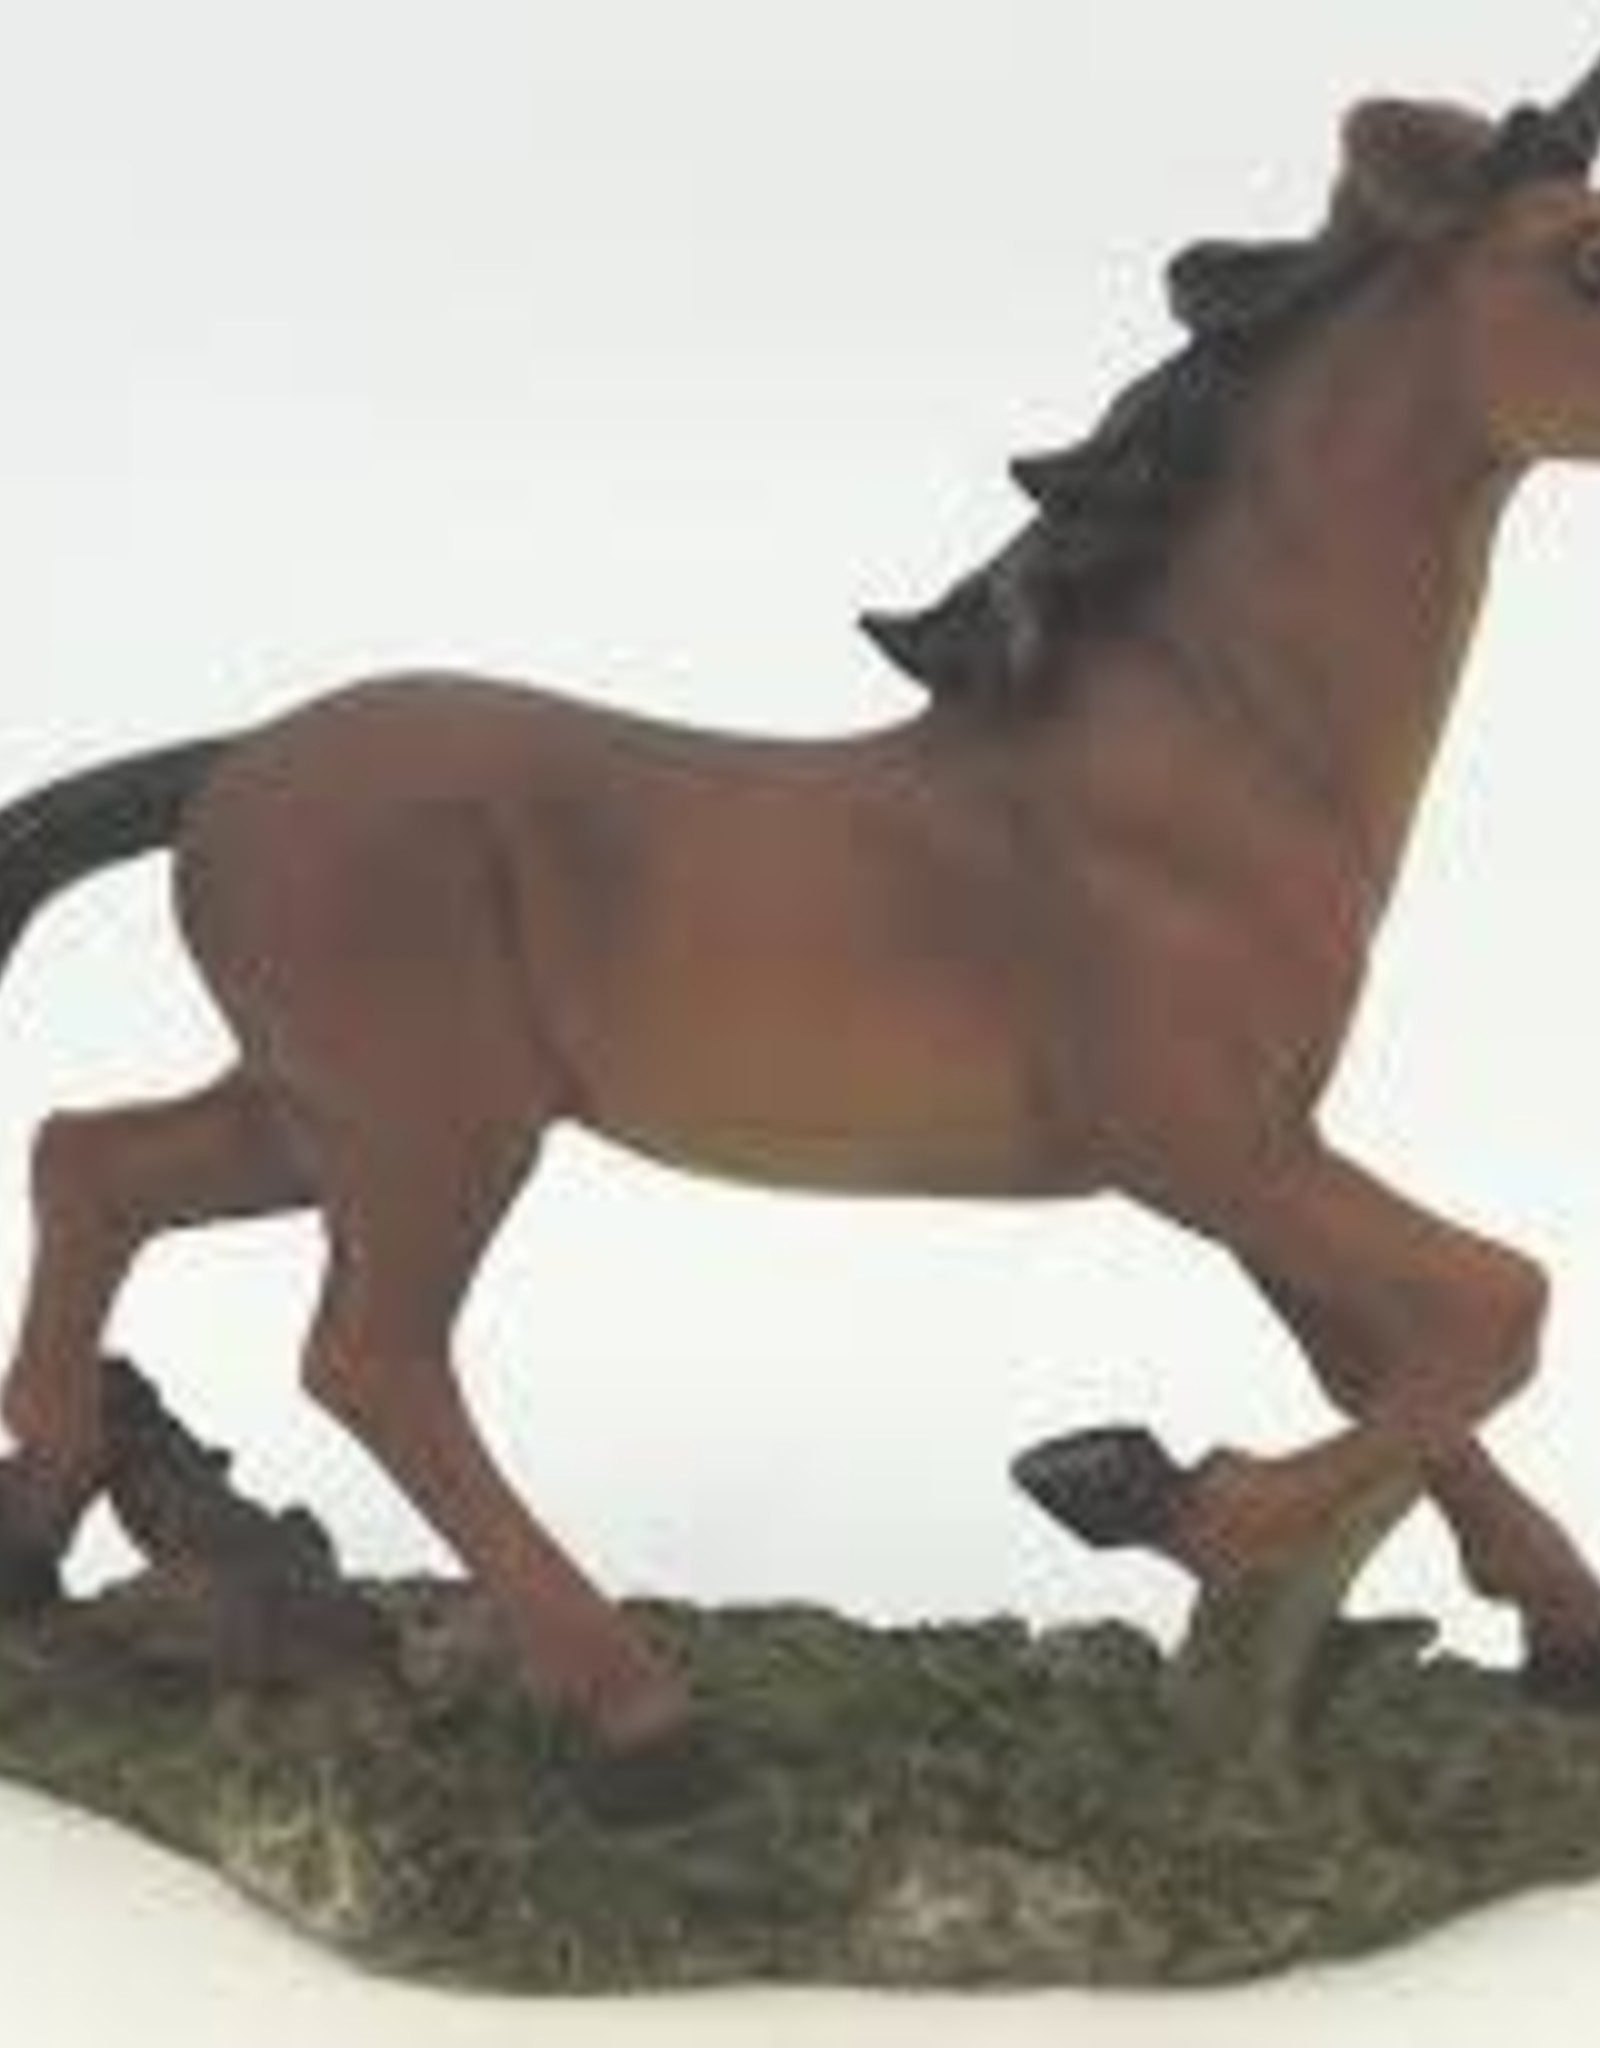 Horse Brown Ornament 15cm High